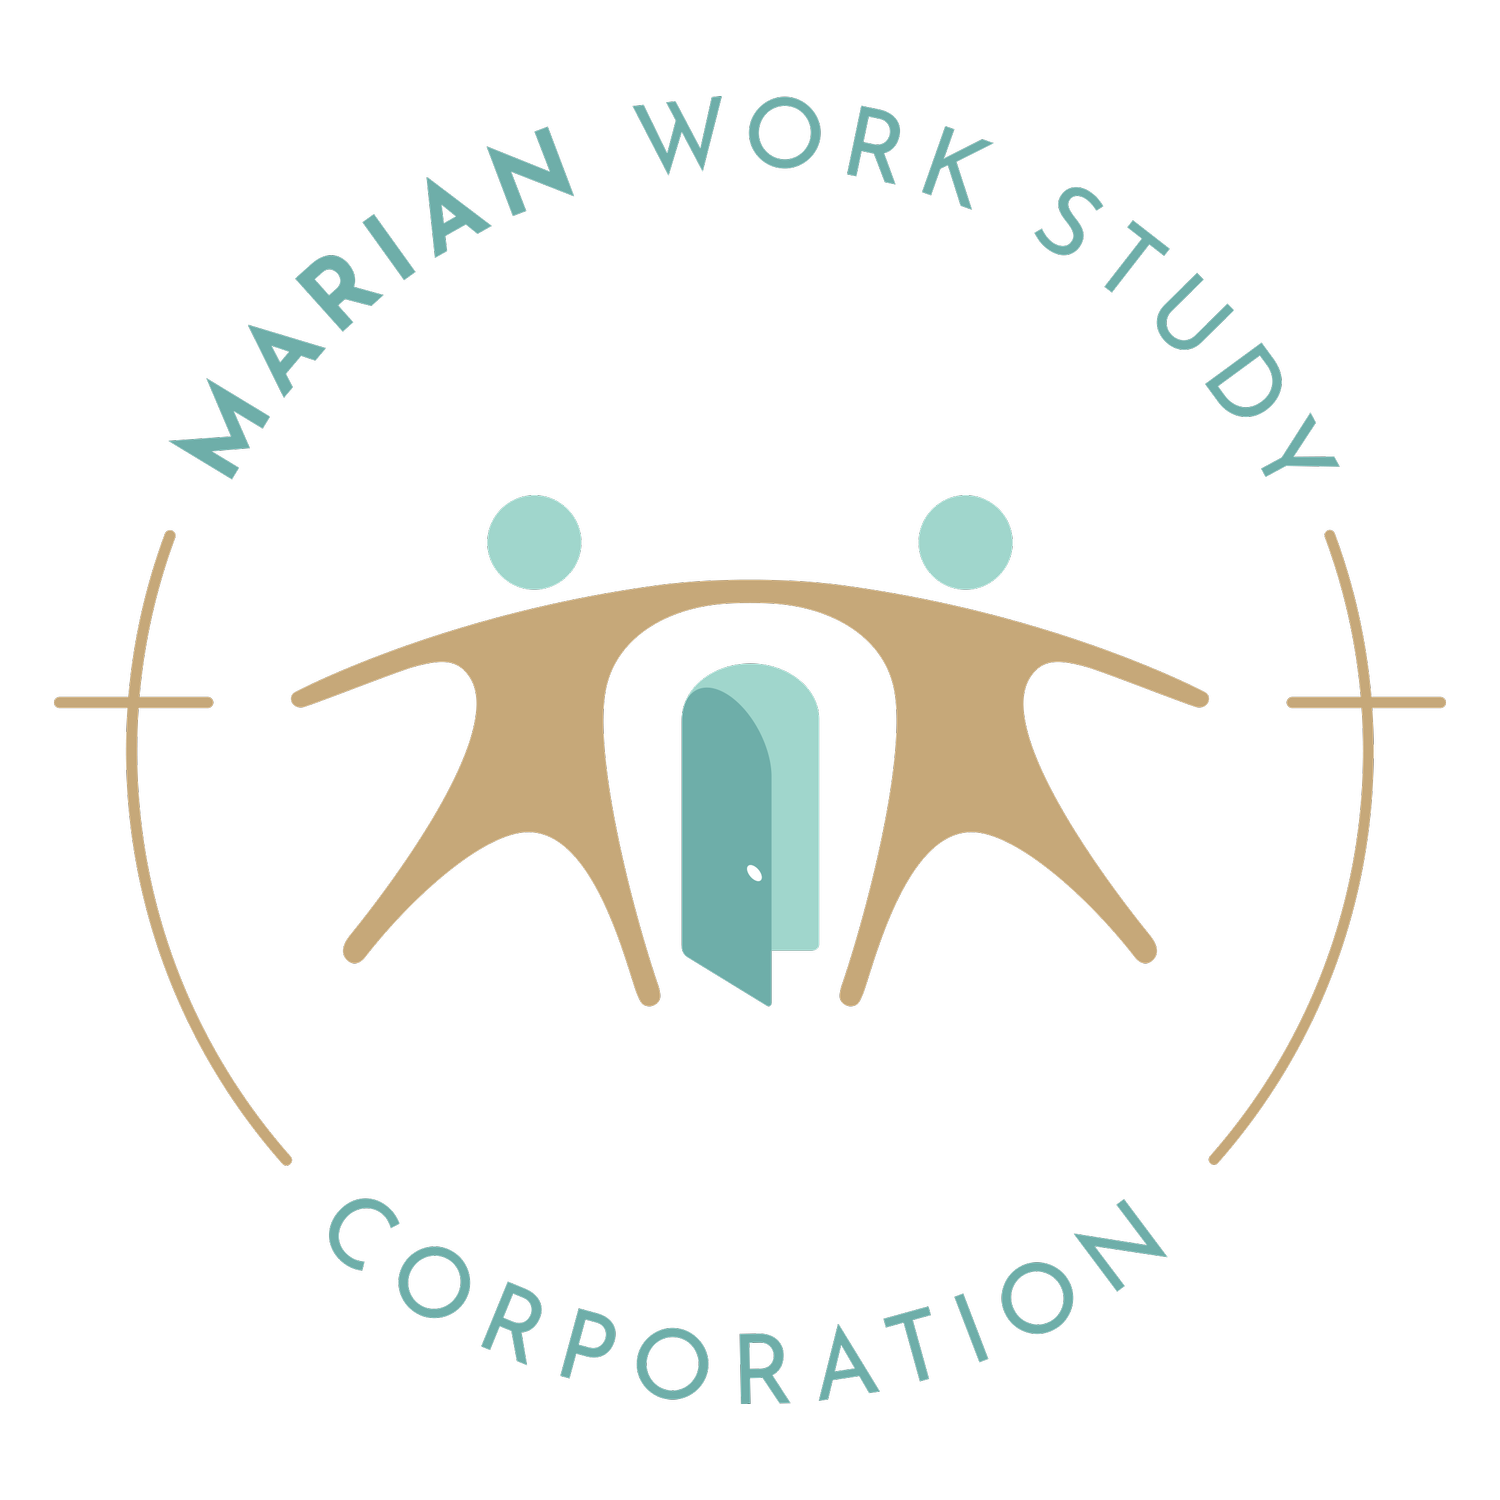 Marian Work Study Corporation